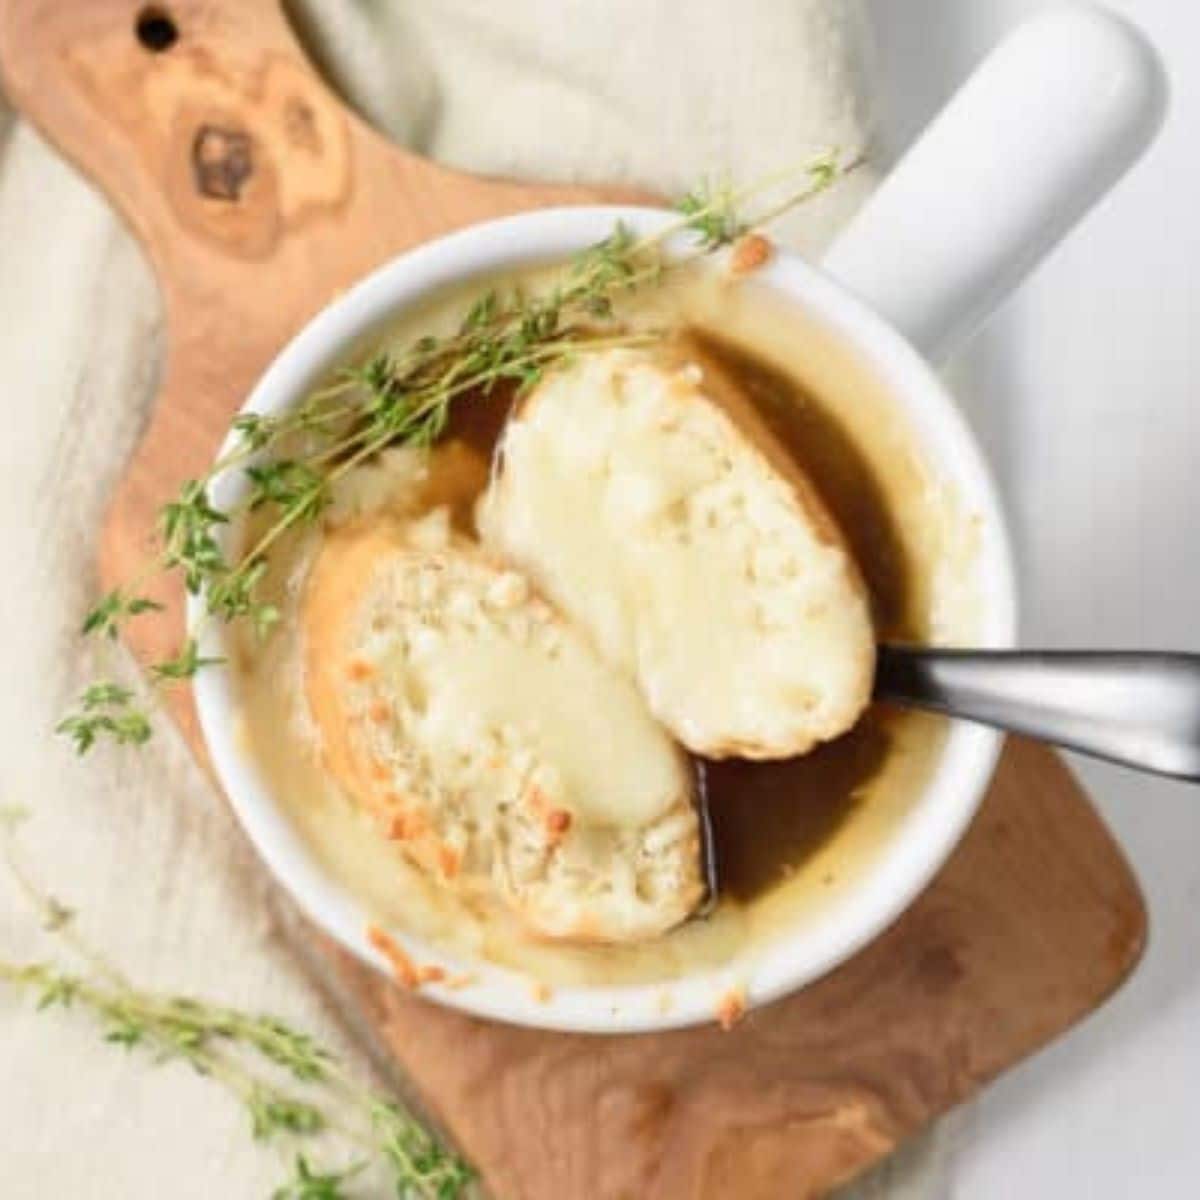 Dairy-Free Onion Soup Mix Recipe (Vegan Option)